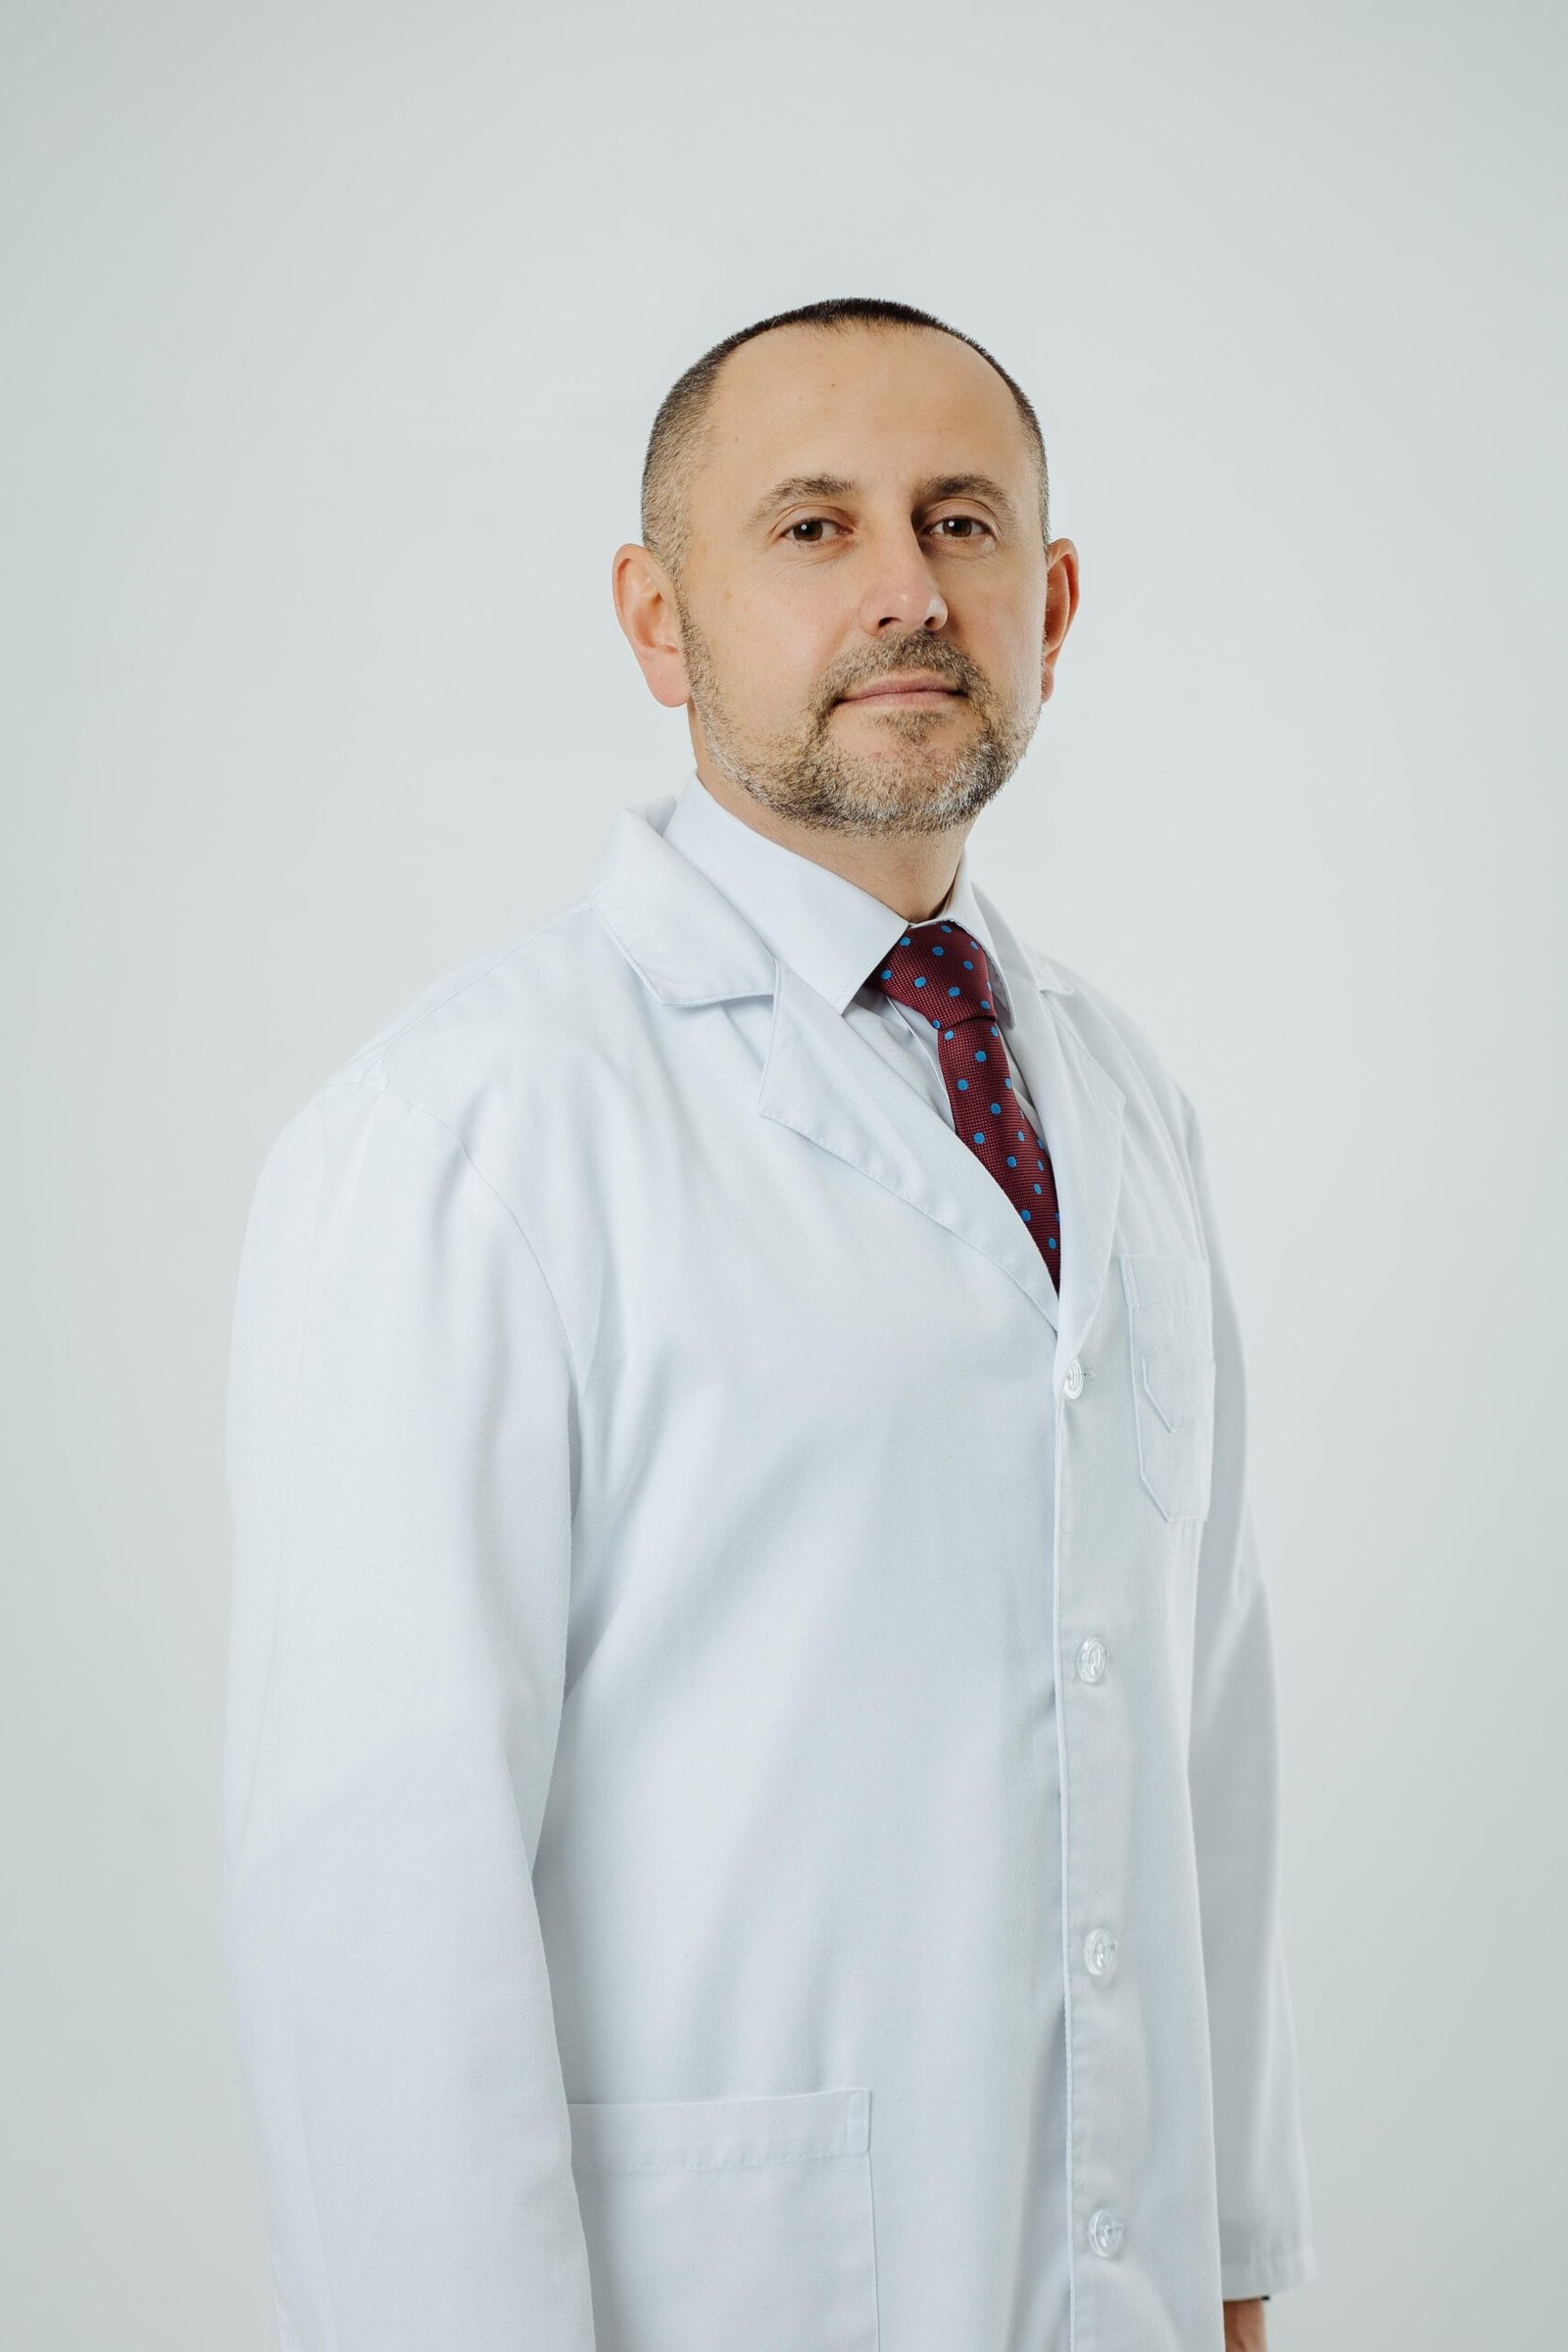 Buchok Oleksandr Oleksandrovych - Vitamin Orvosi Központ